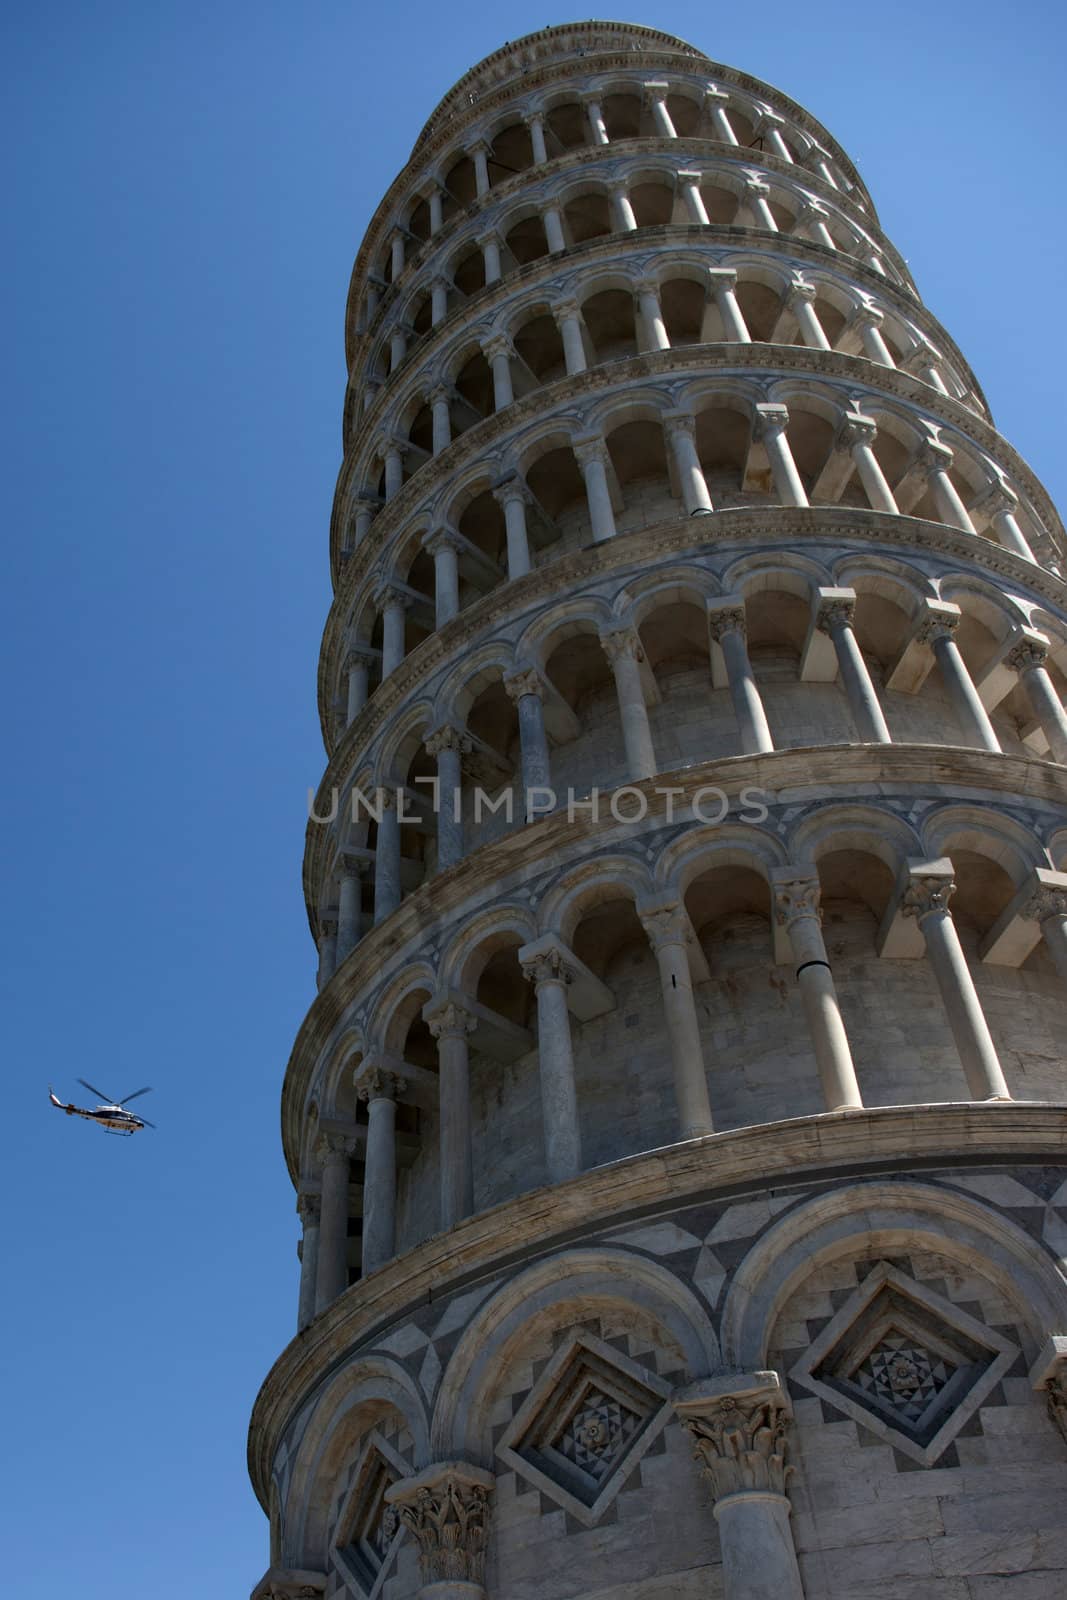 Tower of Pisa by tokotono